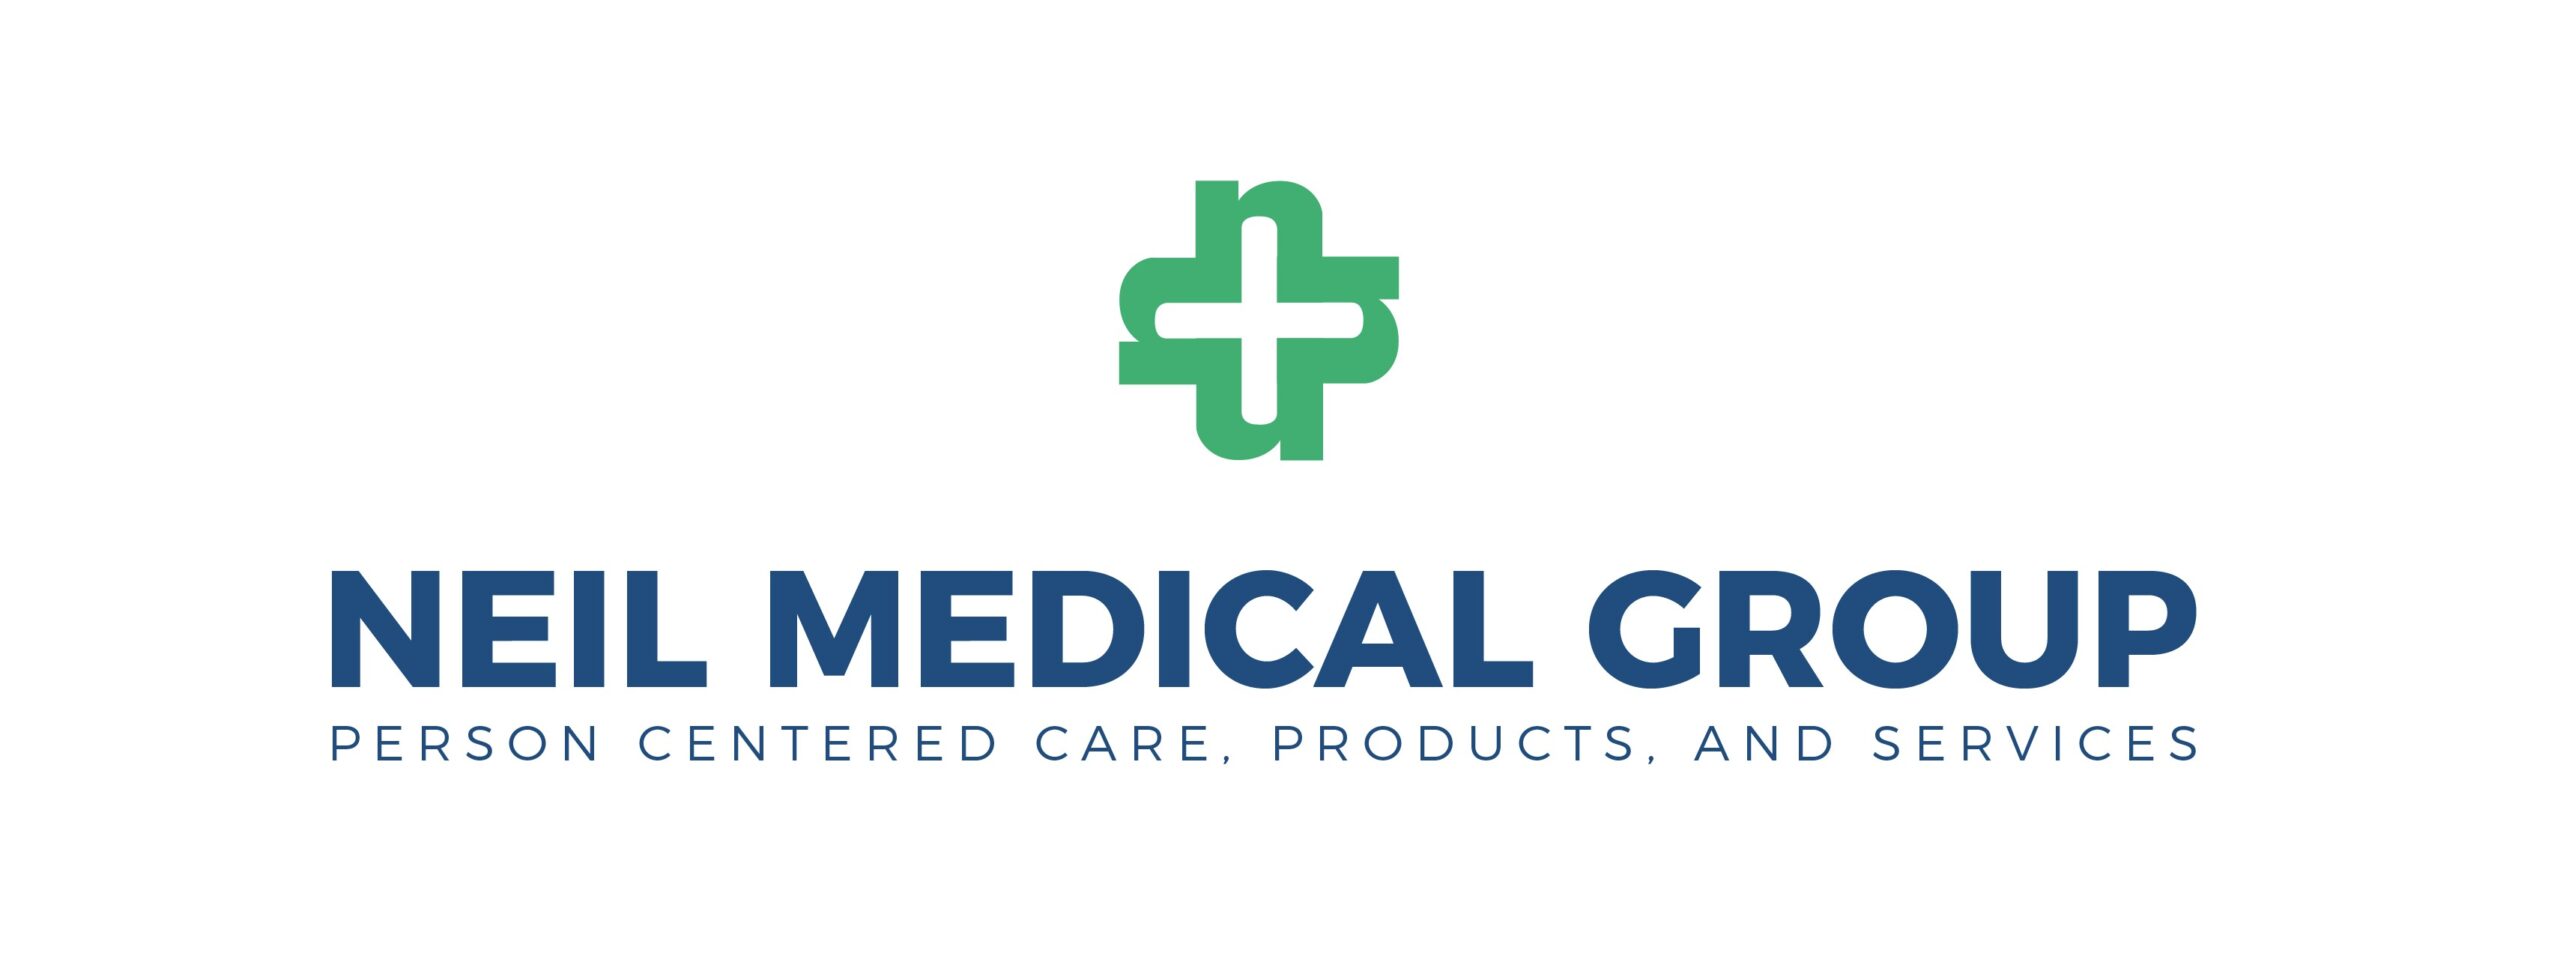 Neil Medical Group